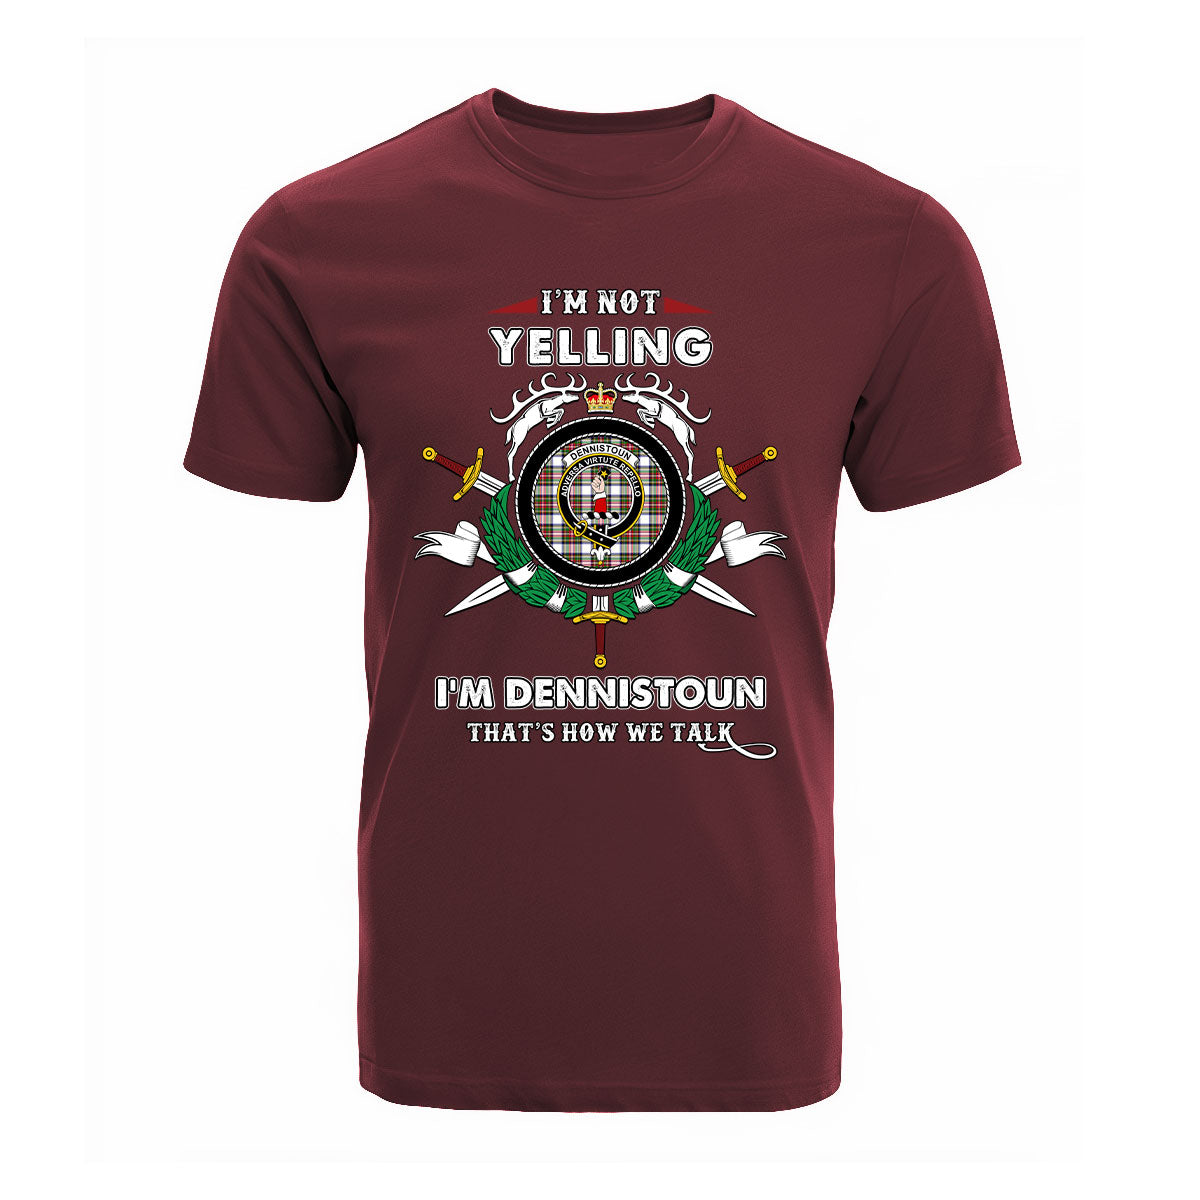 Dennistoun Tartan Crest T-shirt - I'm not yelling style